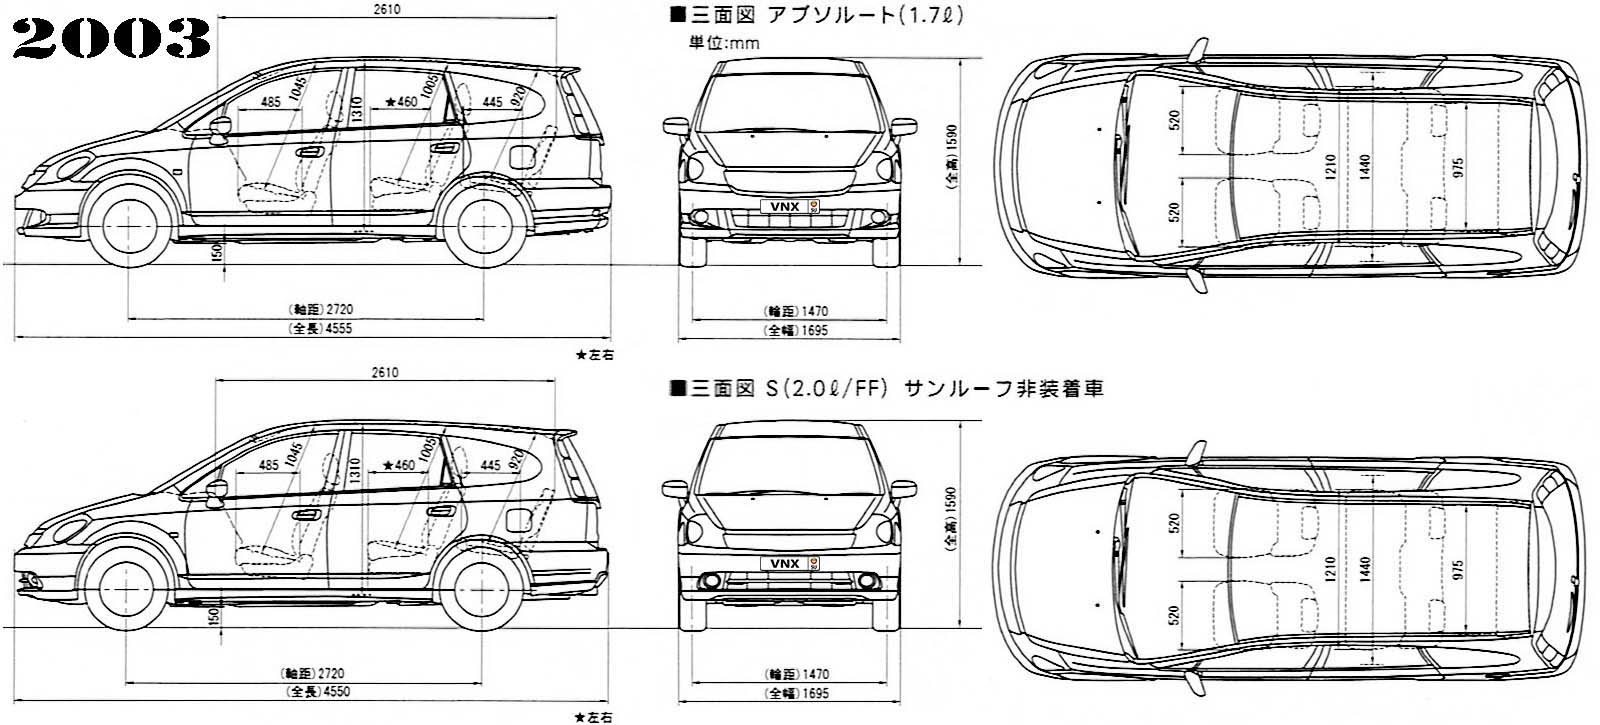 Габаритные размеры Хонда Стрим 2000-2006 (dimensions Honda Stream mk1)